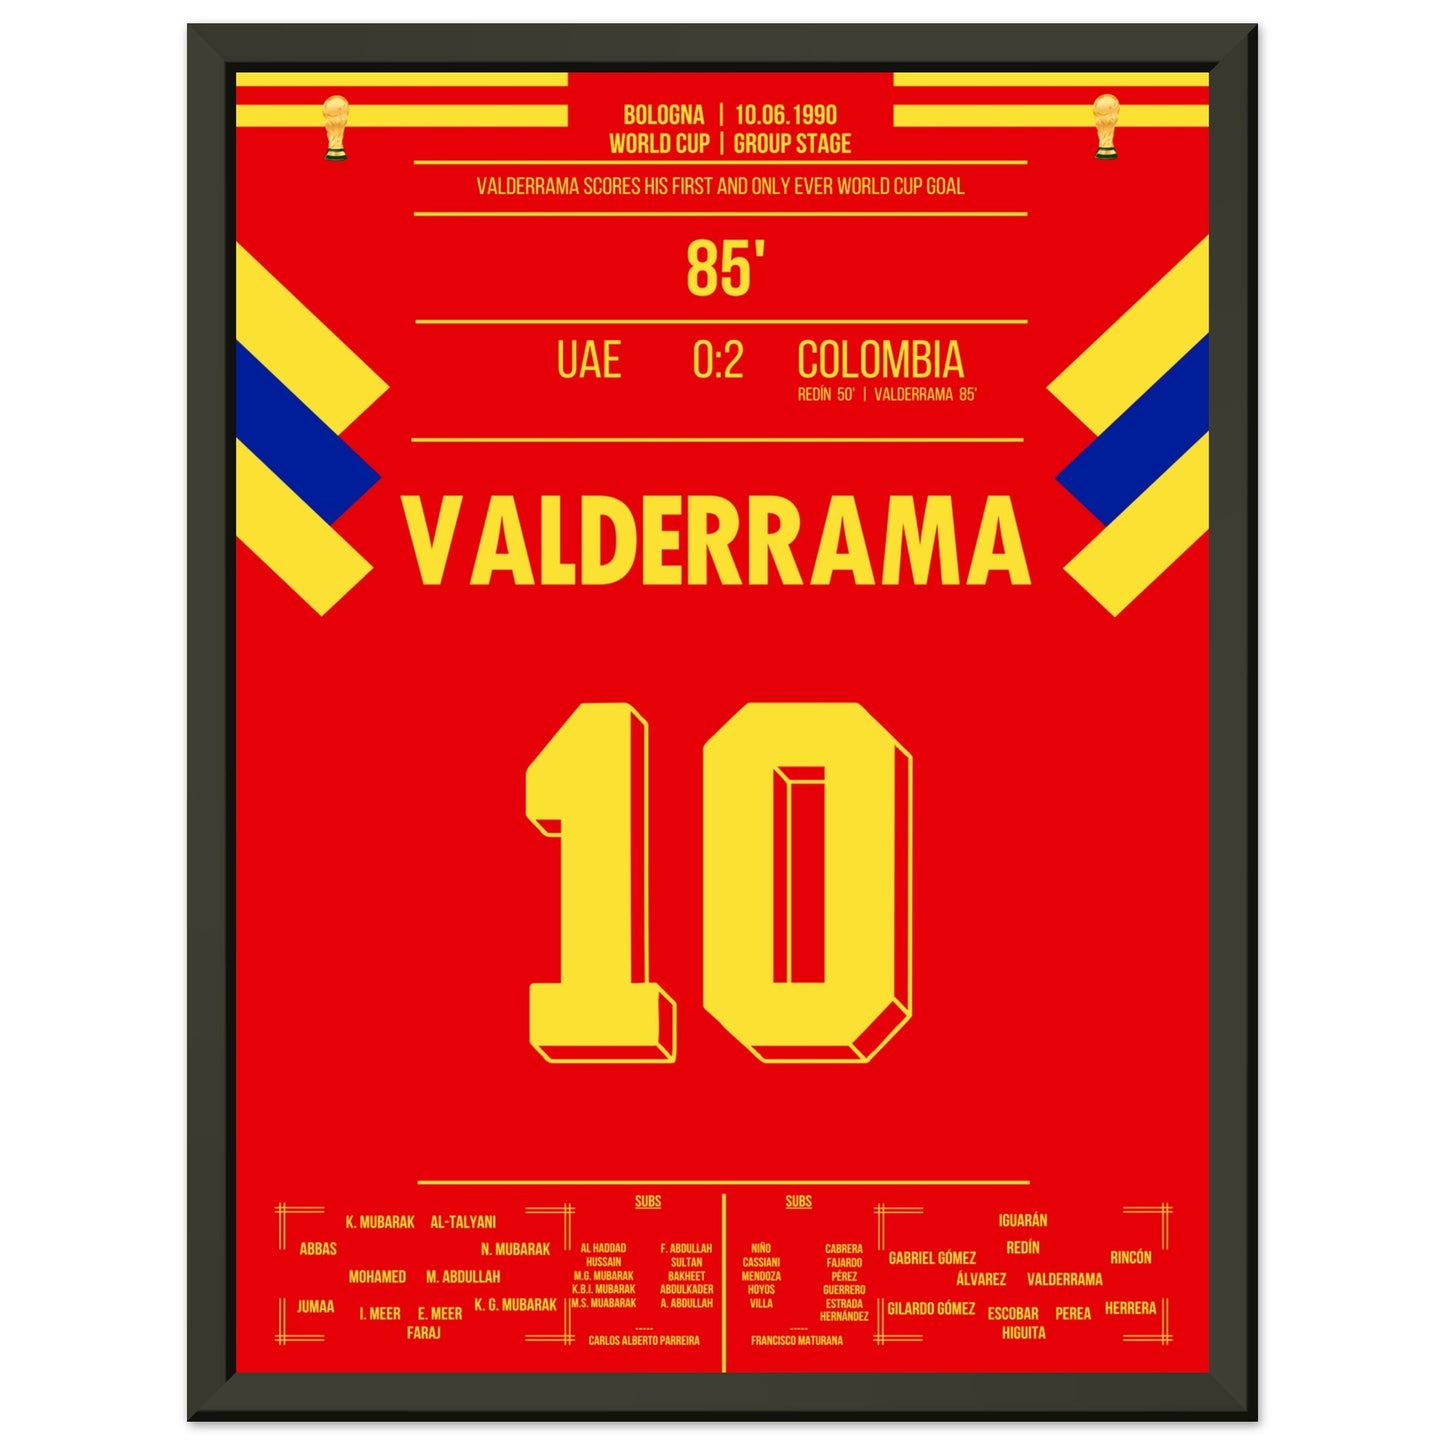 Valderrama's Tor bei der WM 1990 "El Pibe"